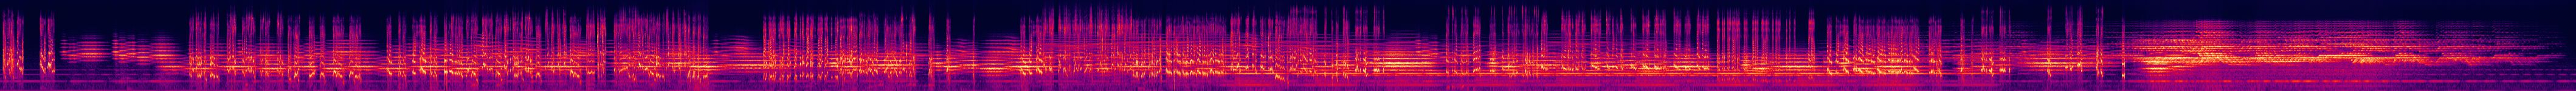 Amor Dei - 4. There IS a God! - Spectrogram.jpg